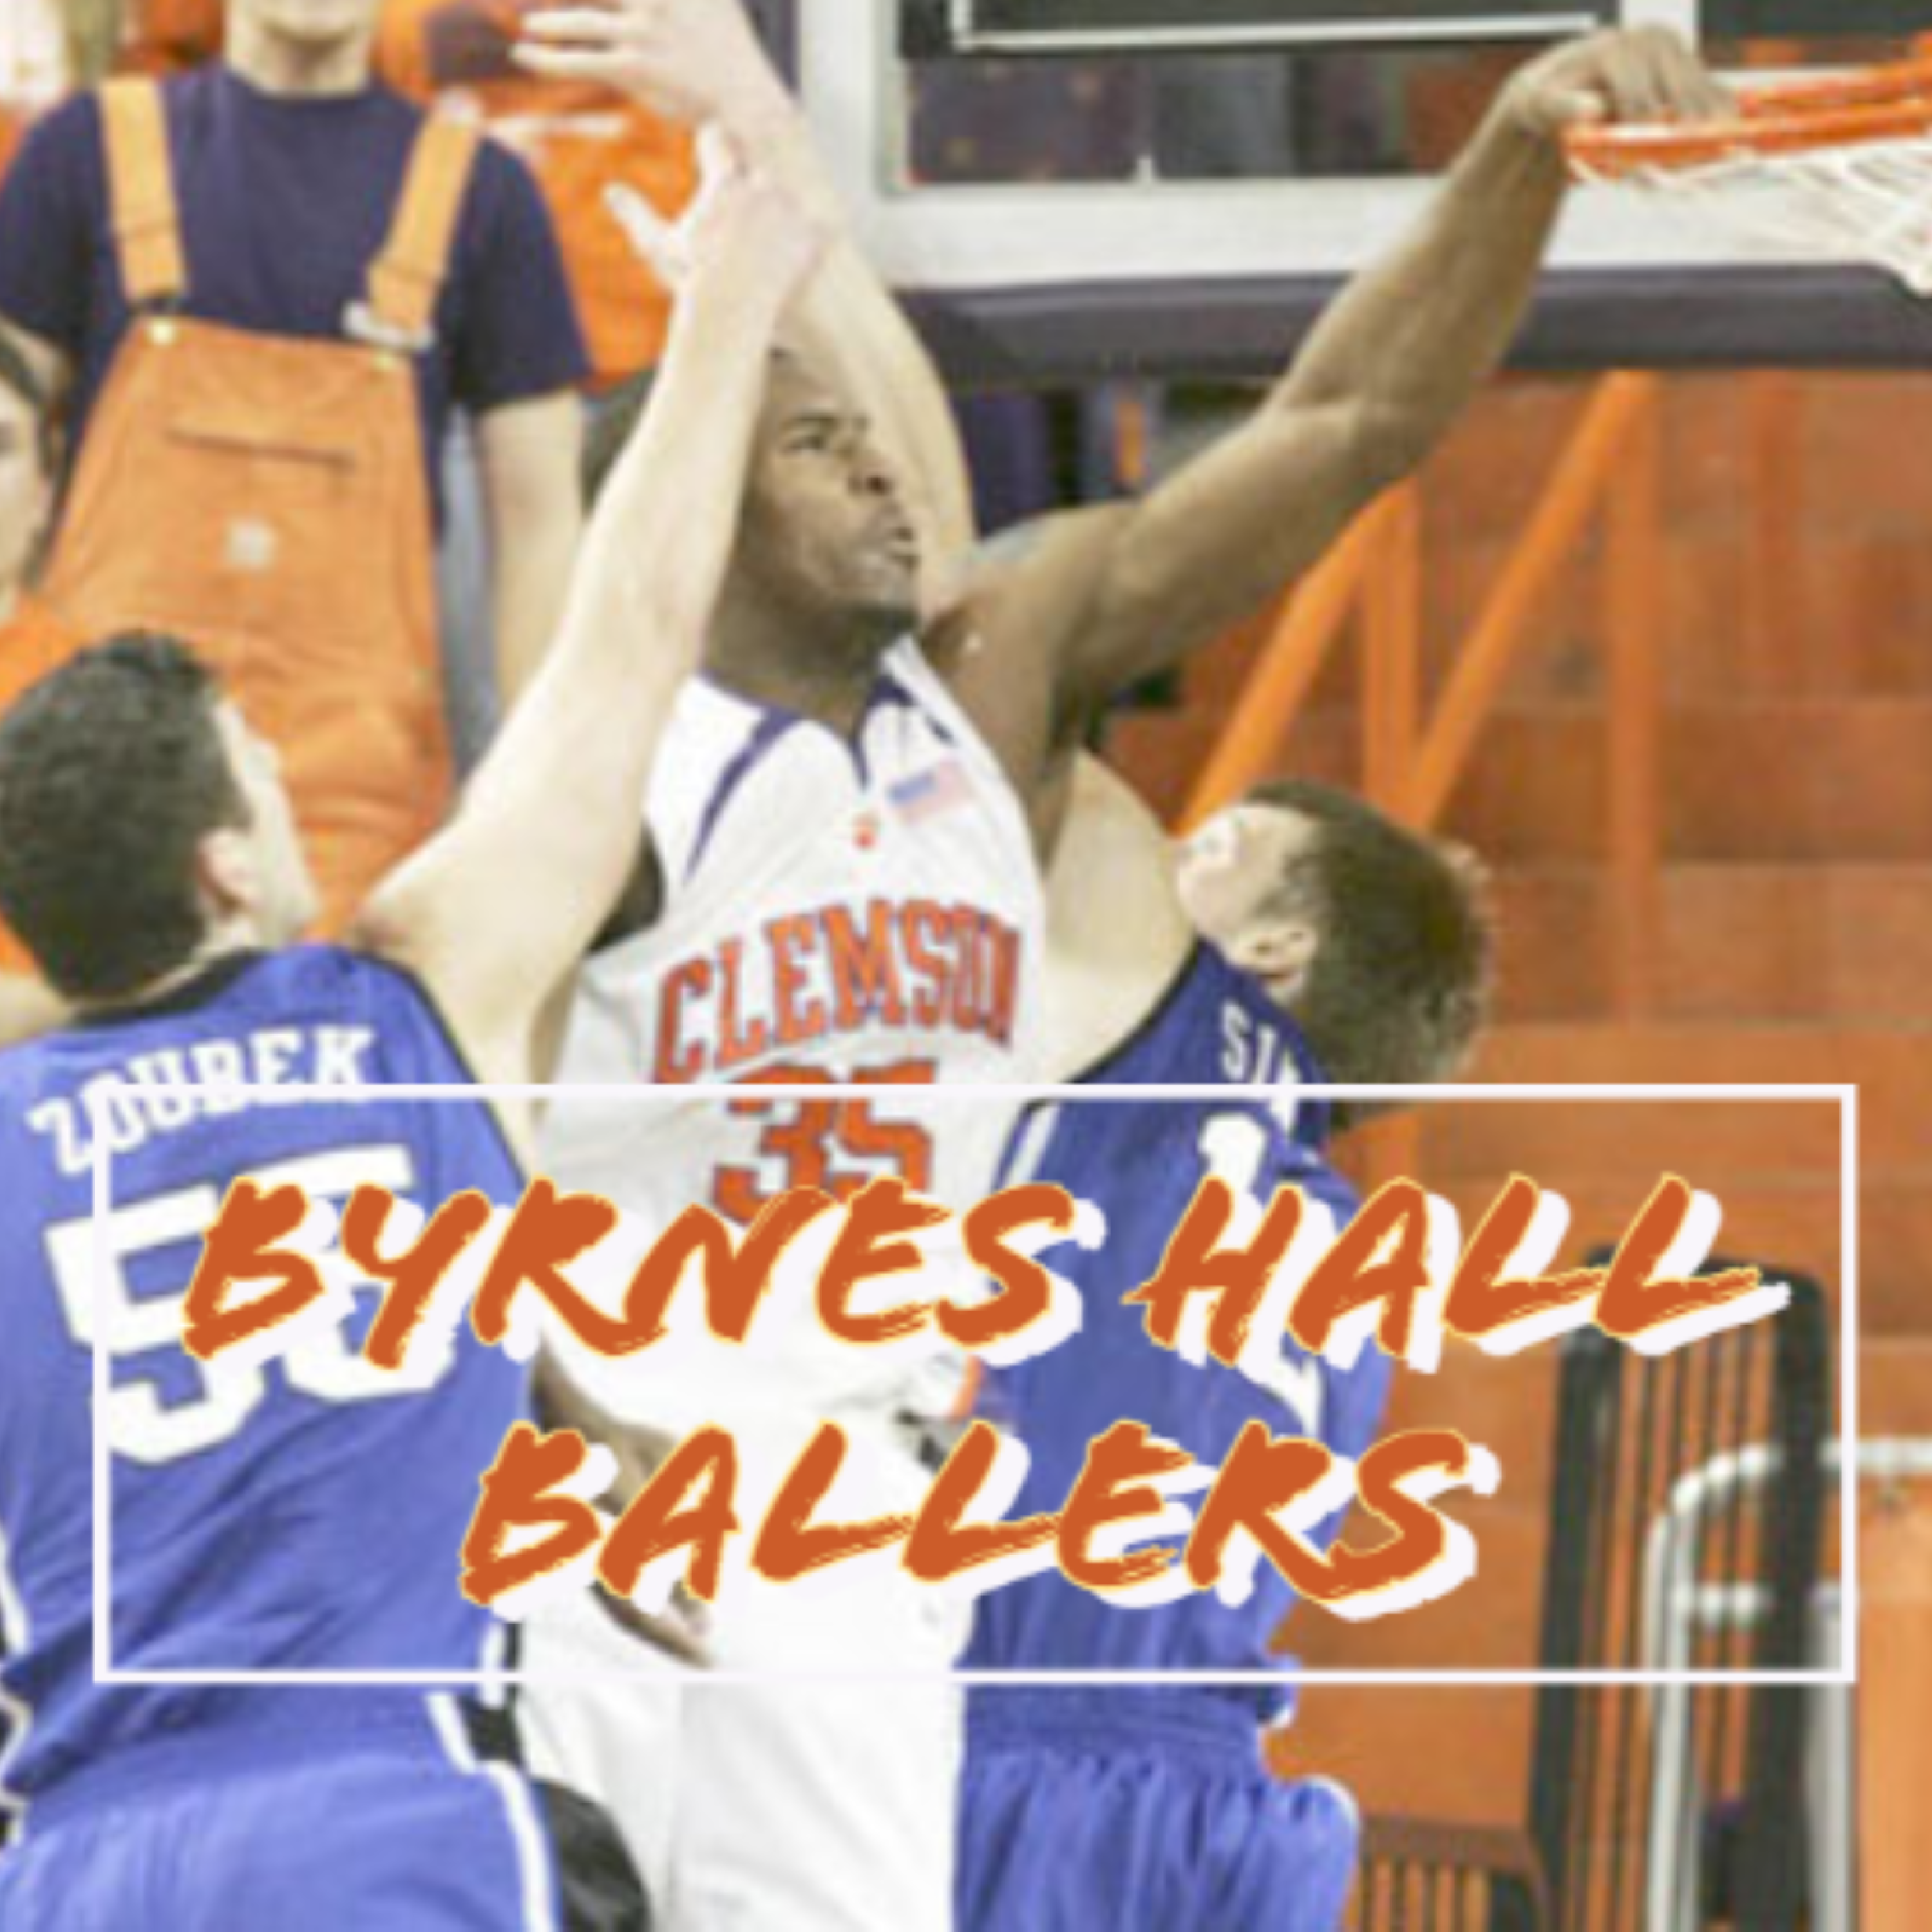 Byrnes Hall Ballers